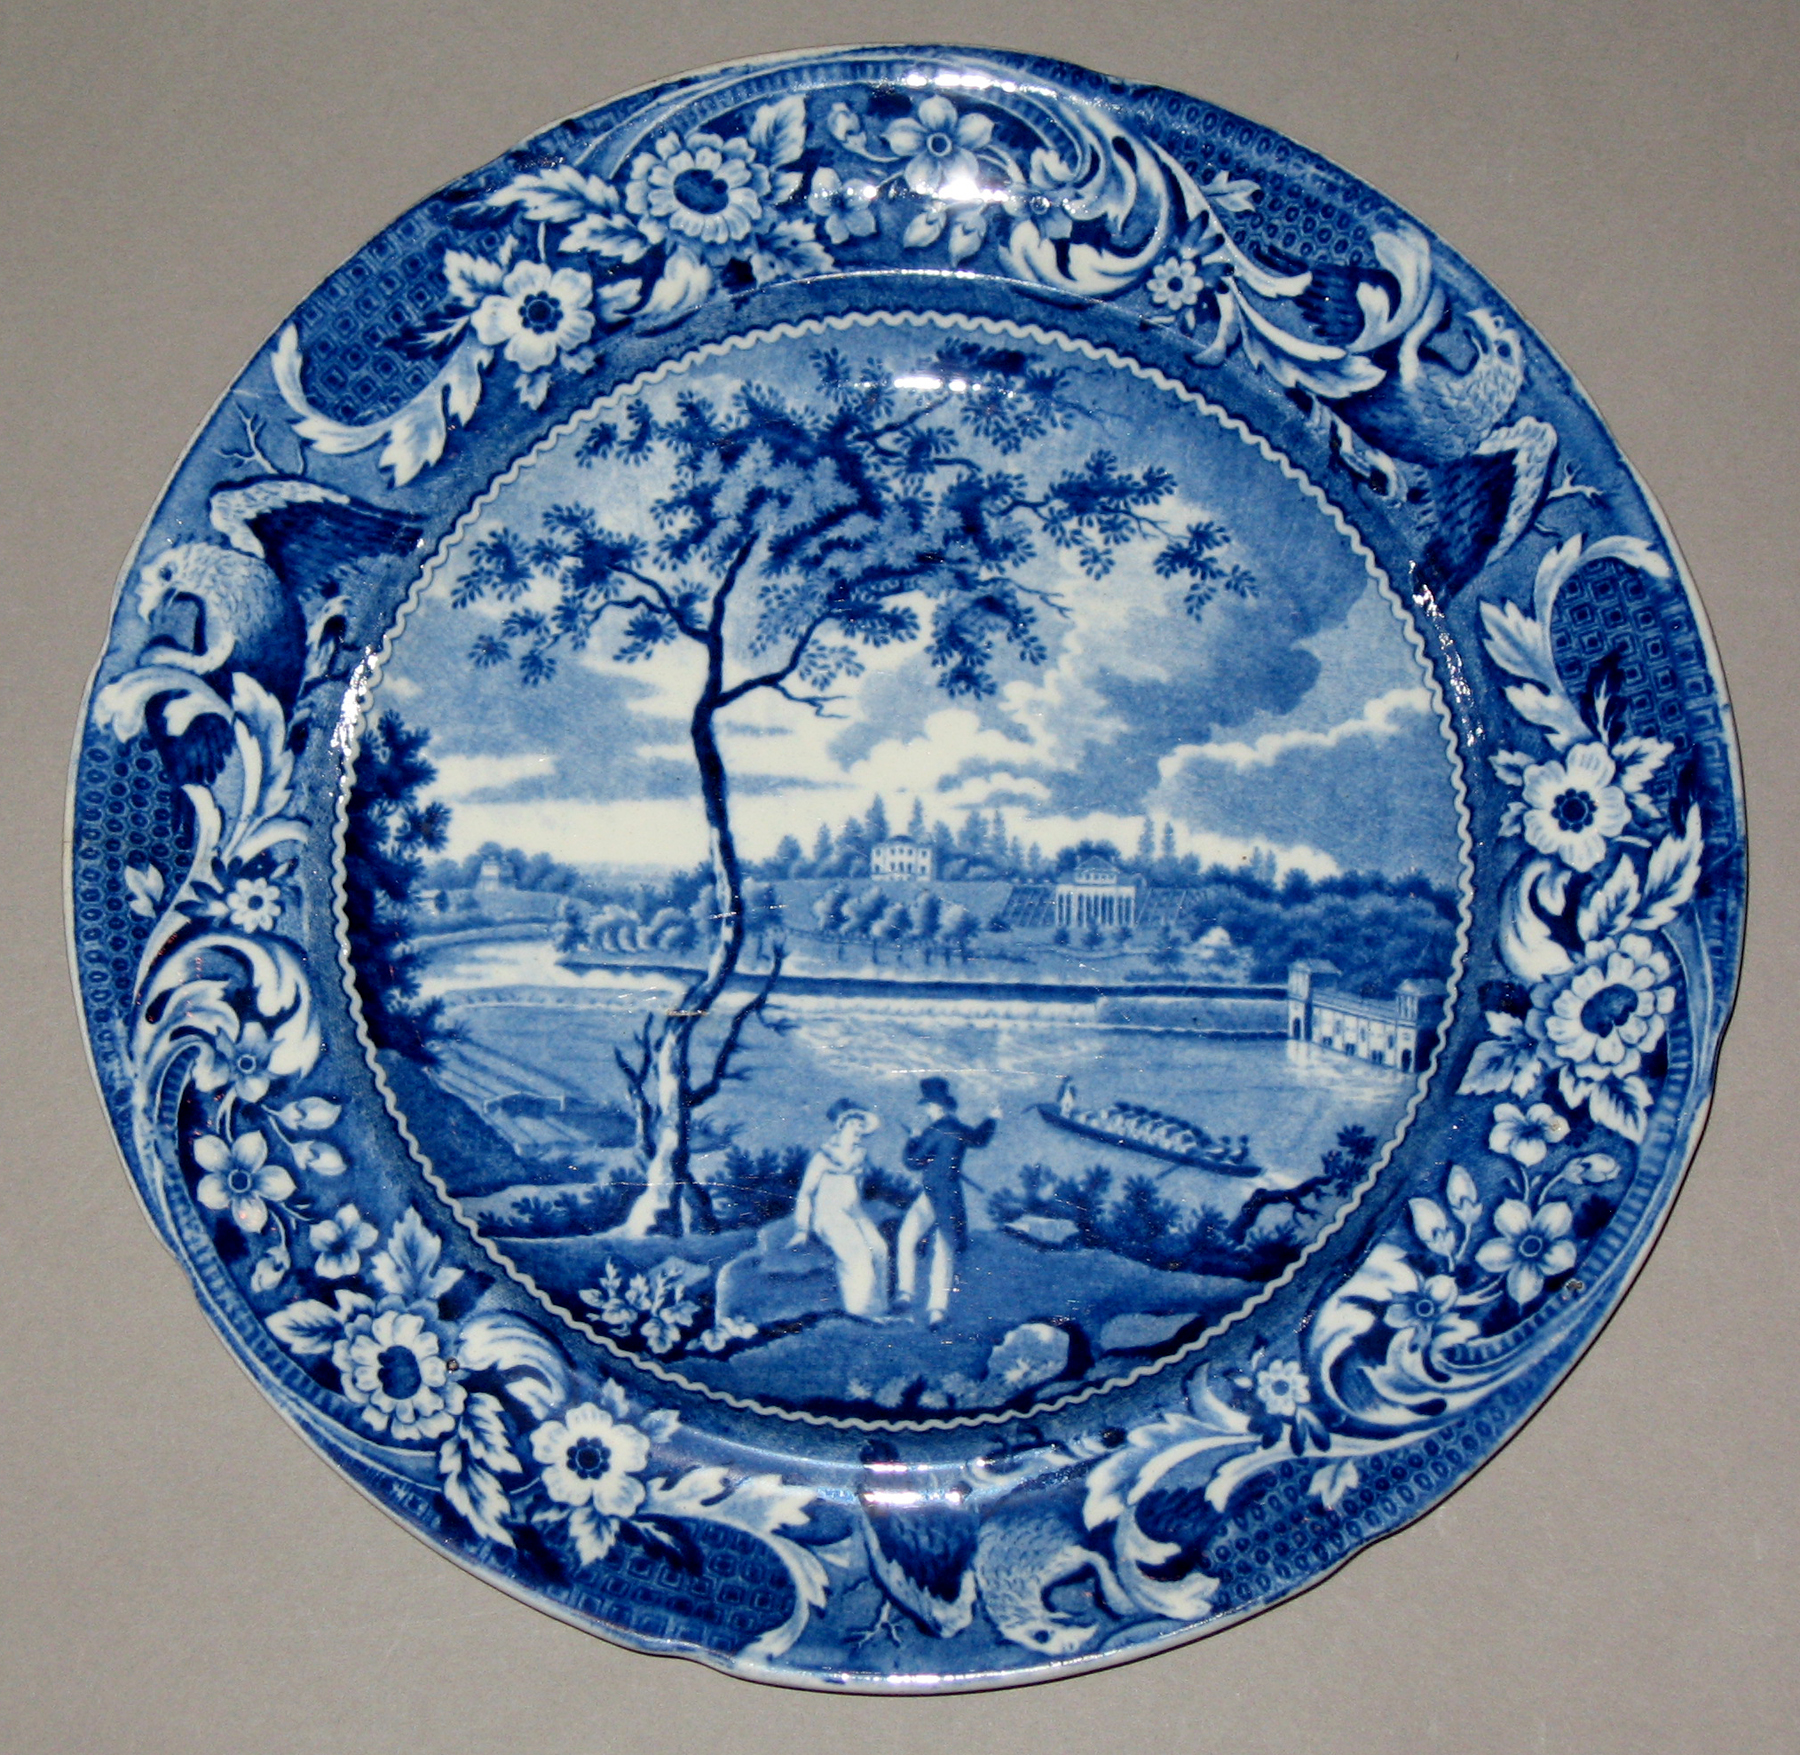 1958.1886 Plate